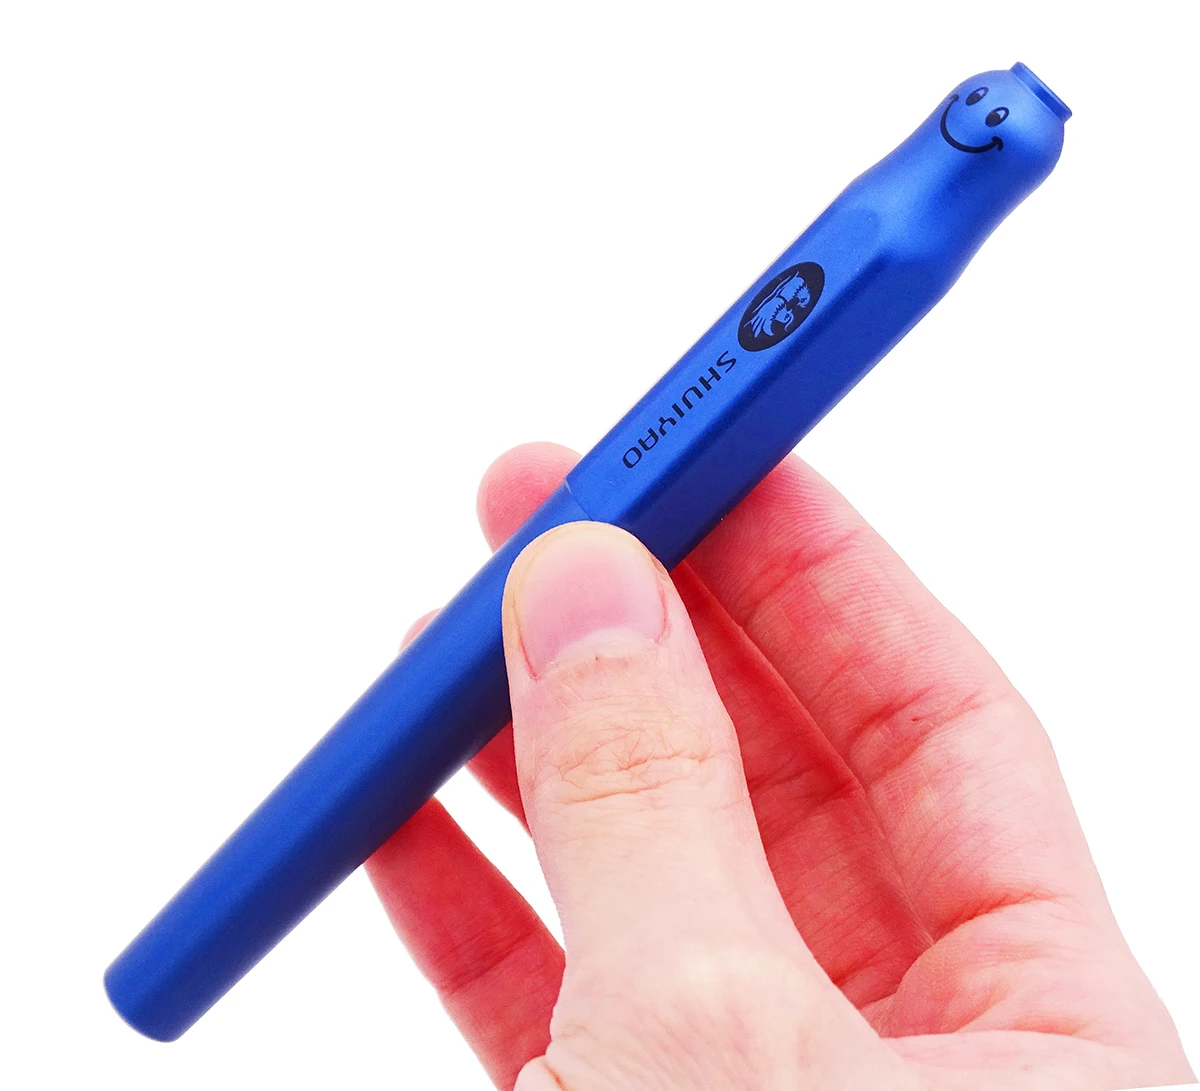 Full Aluminum Alloy Metal Smile Face Fountain Pen SY Cute Lovely Blue Fashion Writing Gift Pen Smooth Iridium 0.38/0.5mm